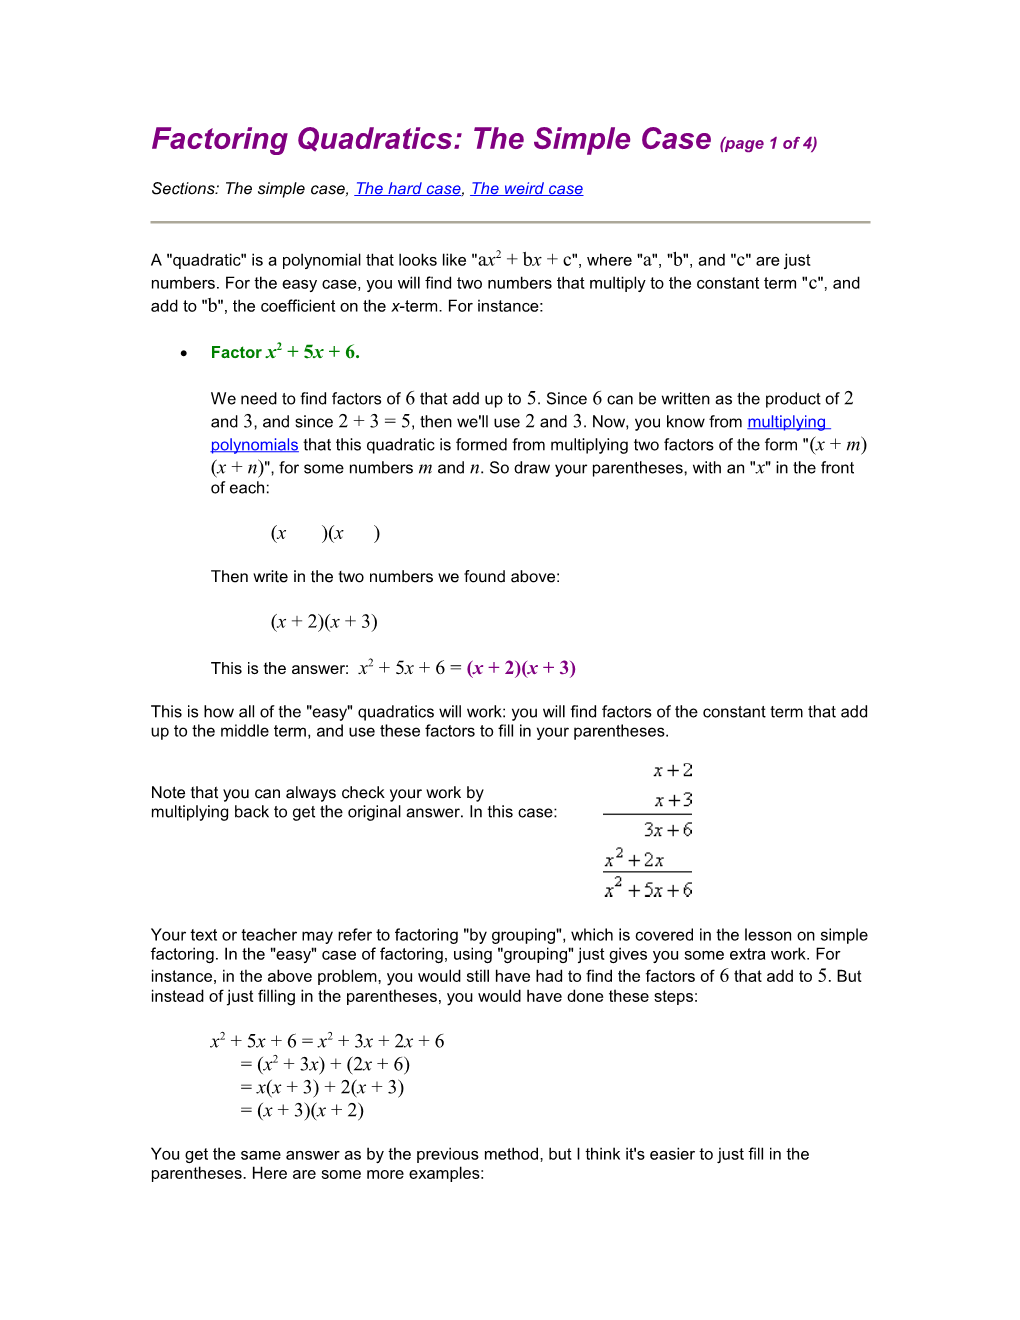 Factoring Quadratics: the Simple Case (Page 1 of 4)